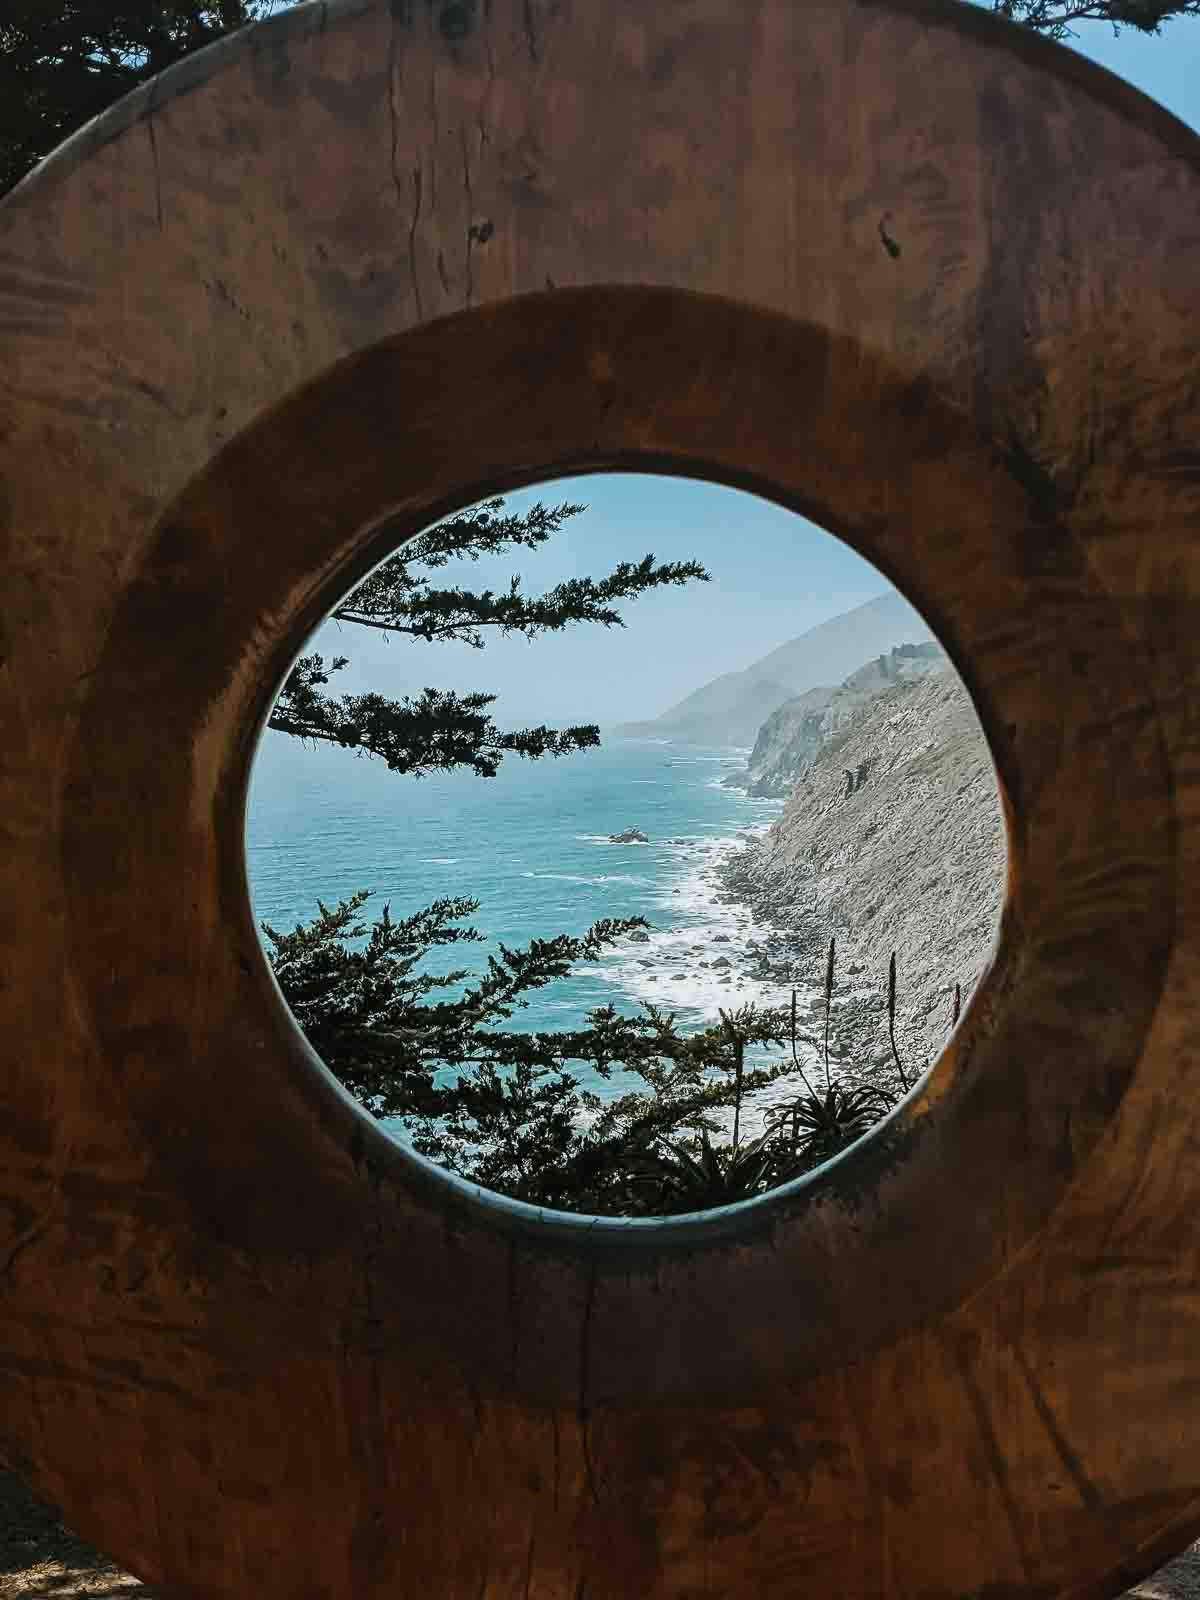 Big Sur view through wooden sculpture. 